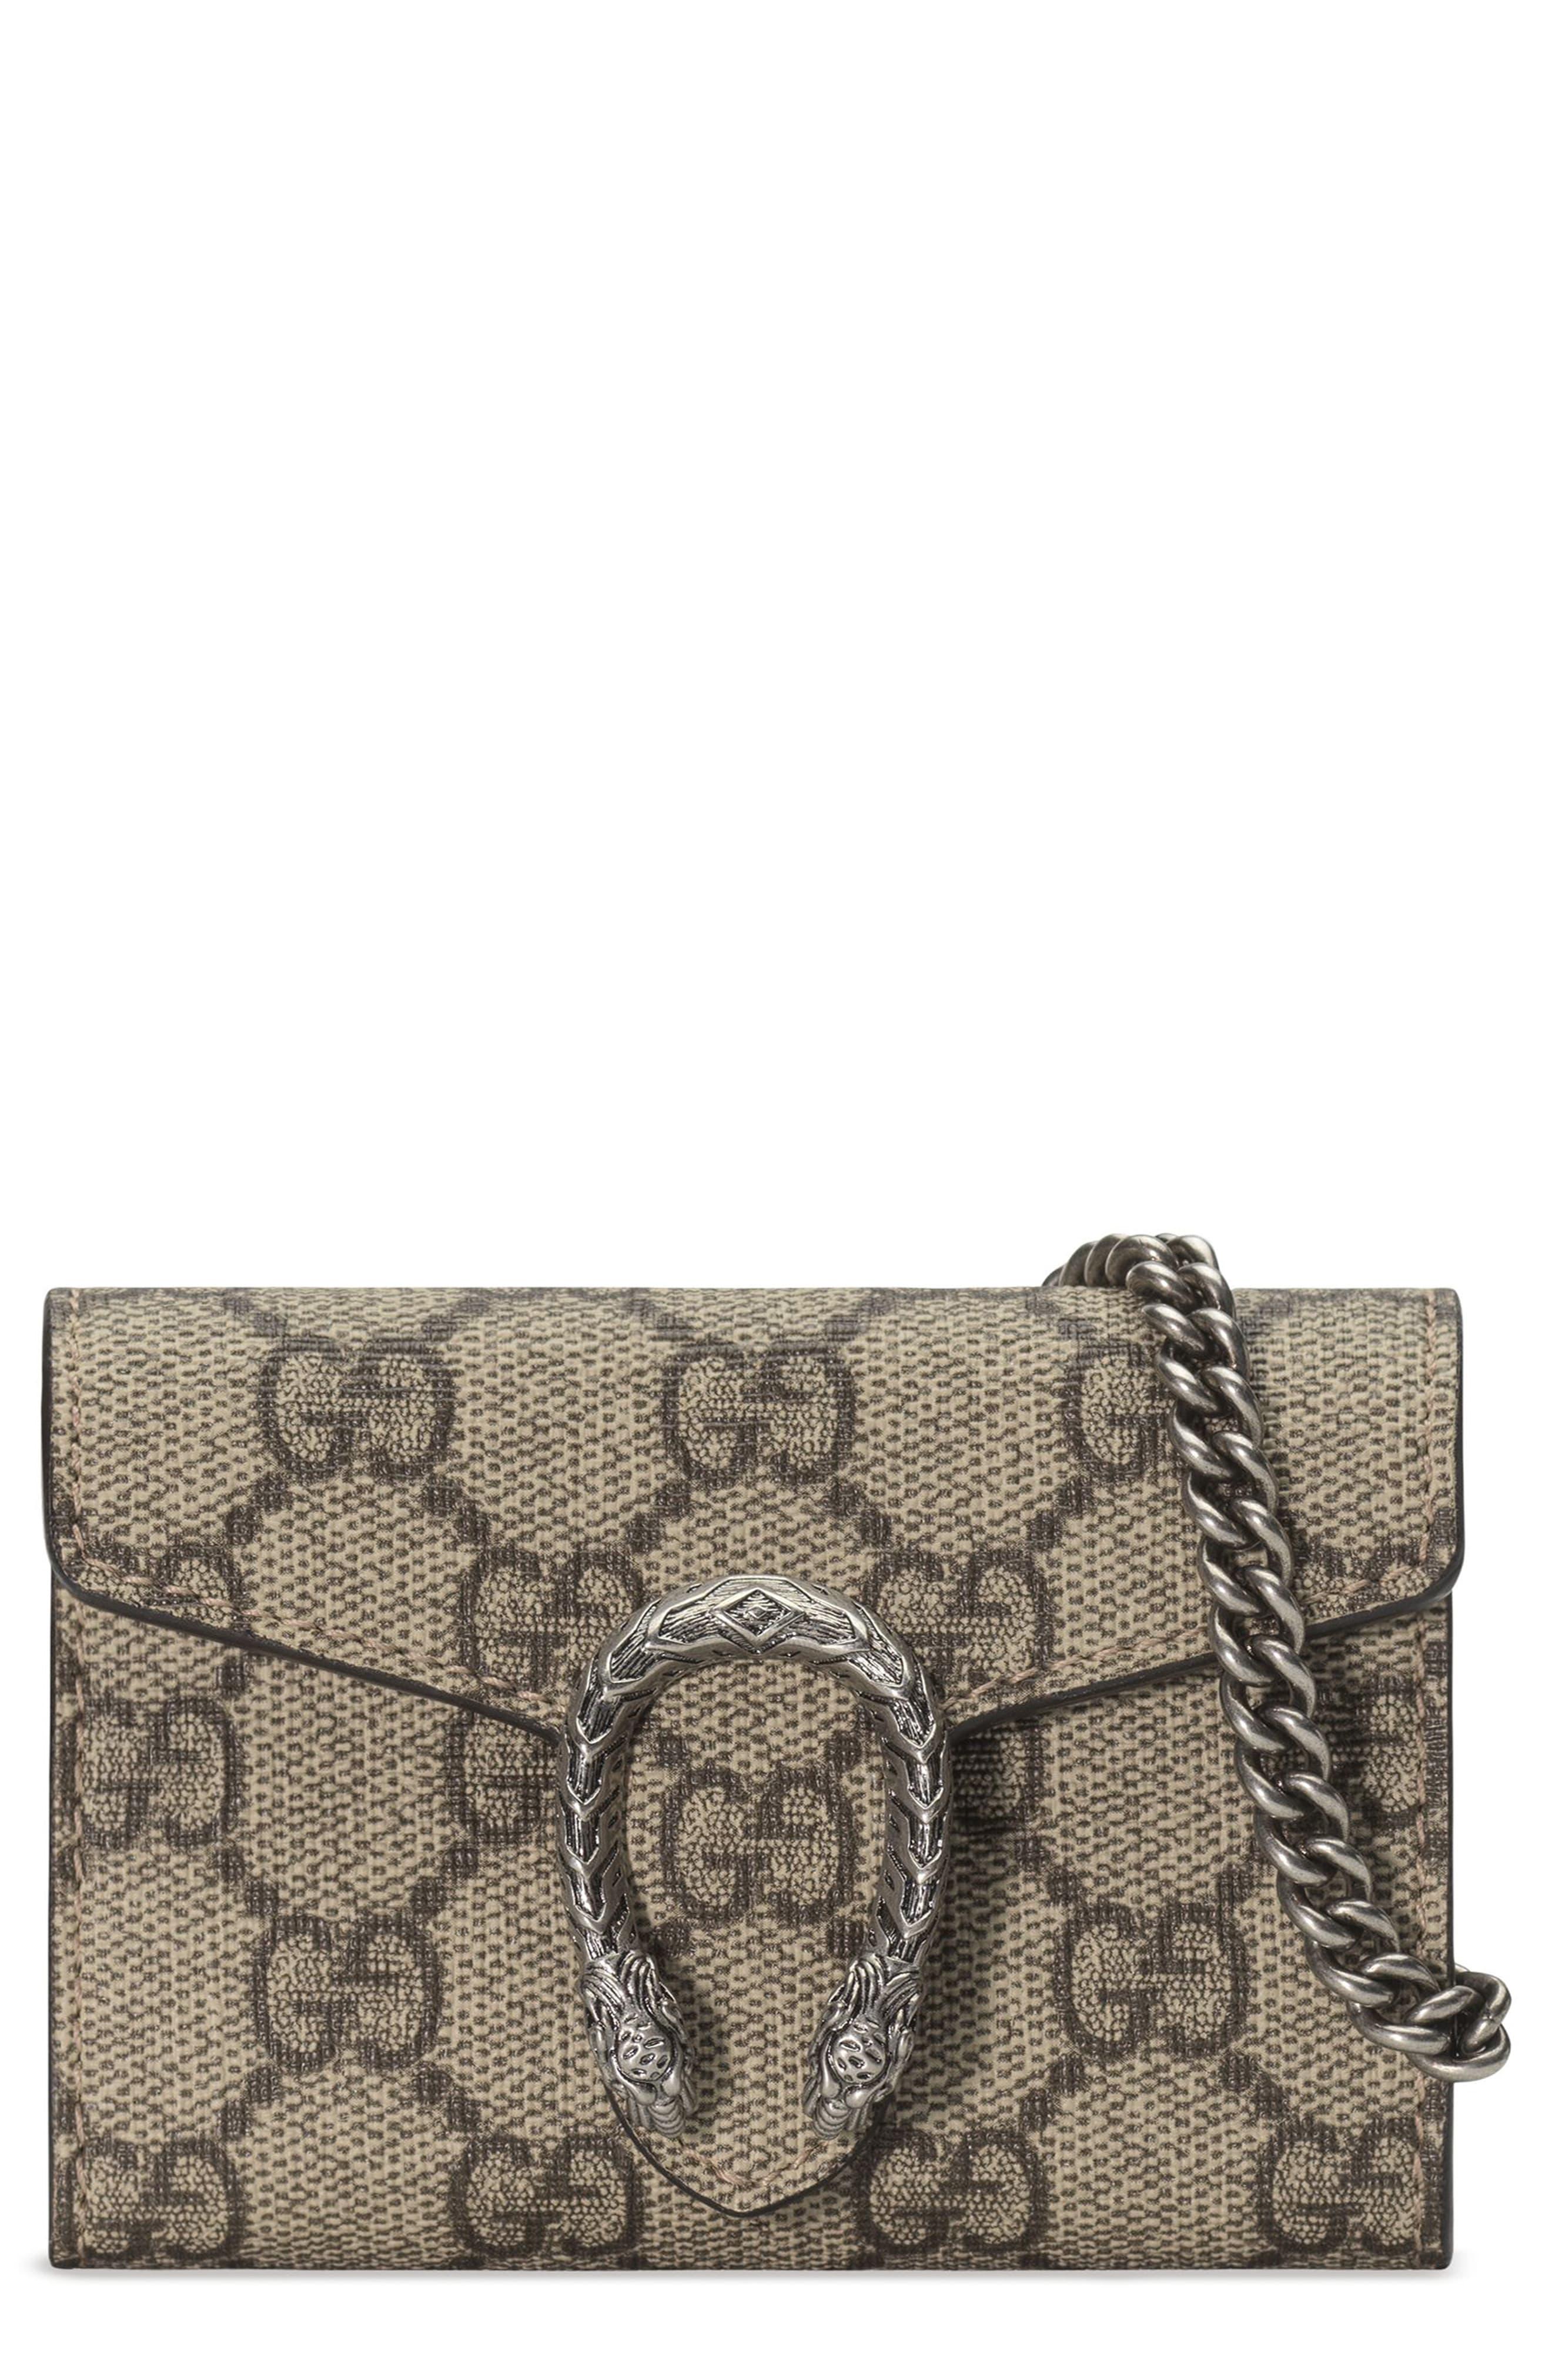 Gucci Dionysus Printed Coated-canvas Shoulder Bag - Beige - One Size